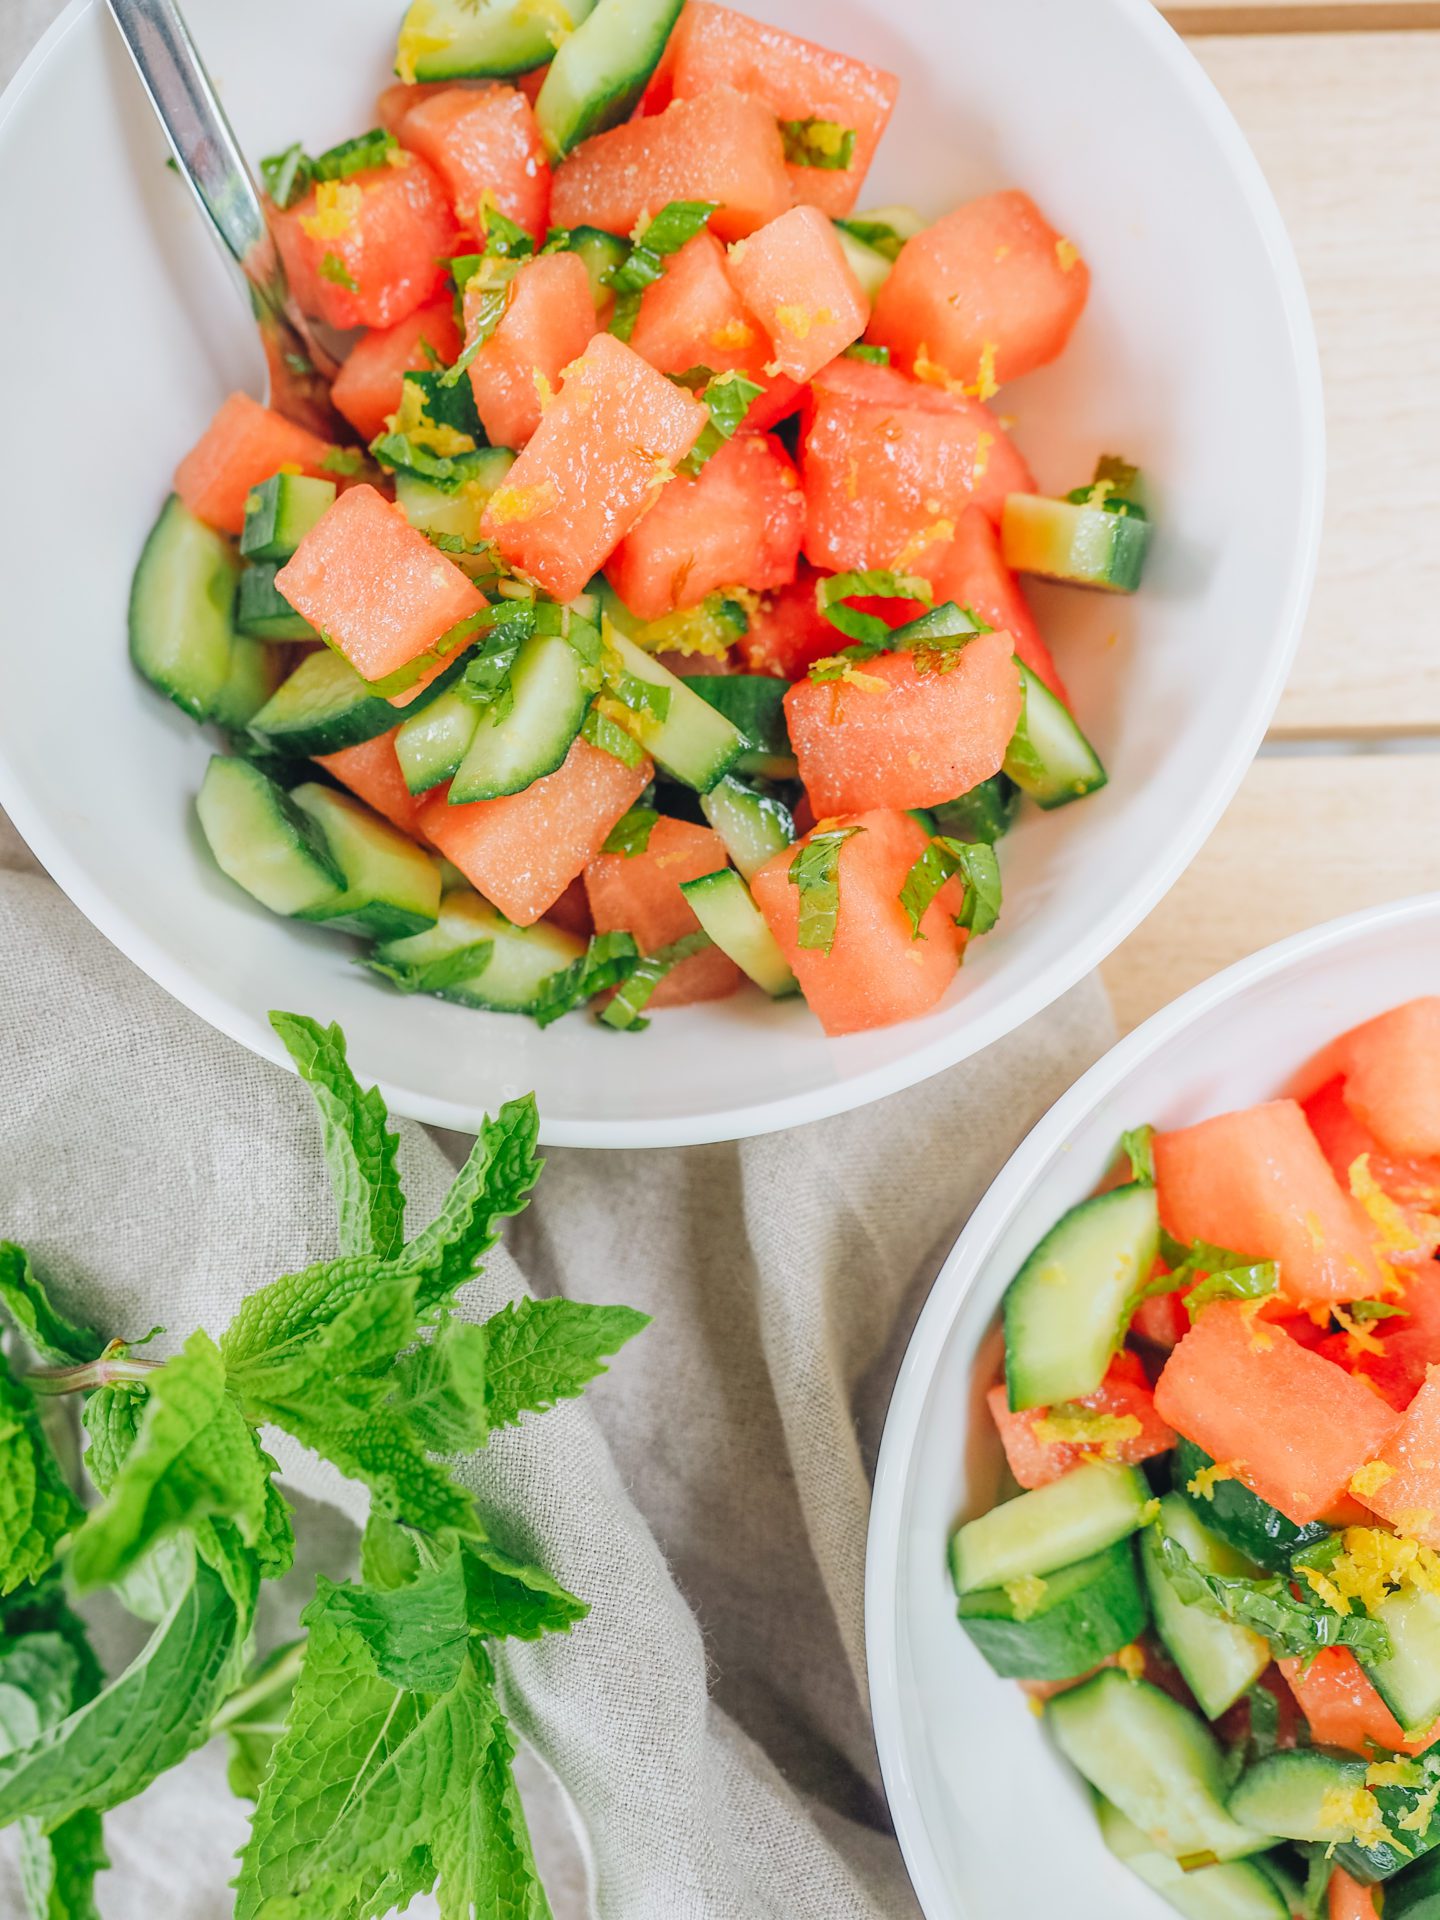 How To Make a Summer Cucumber & Watermelon Salad